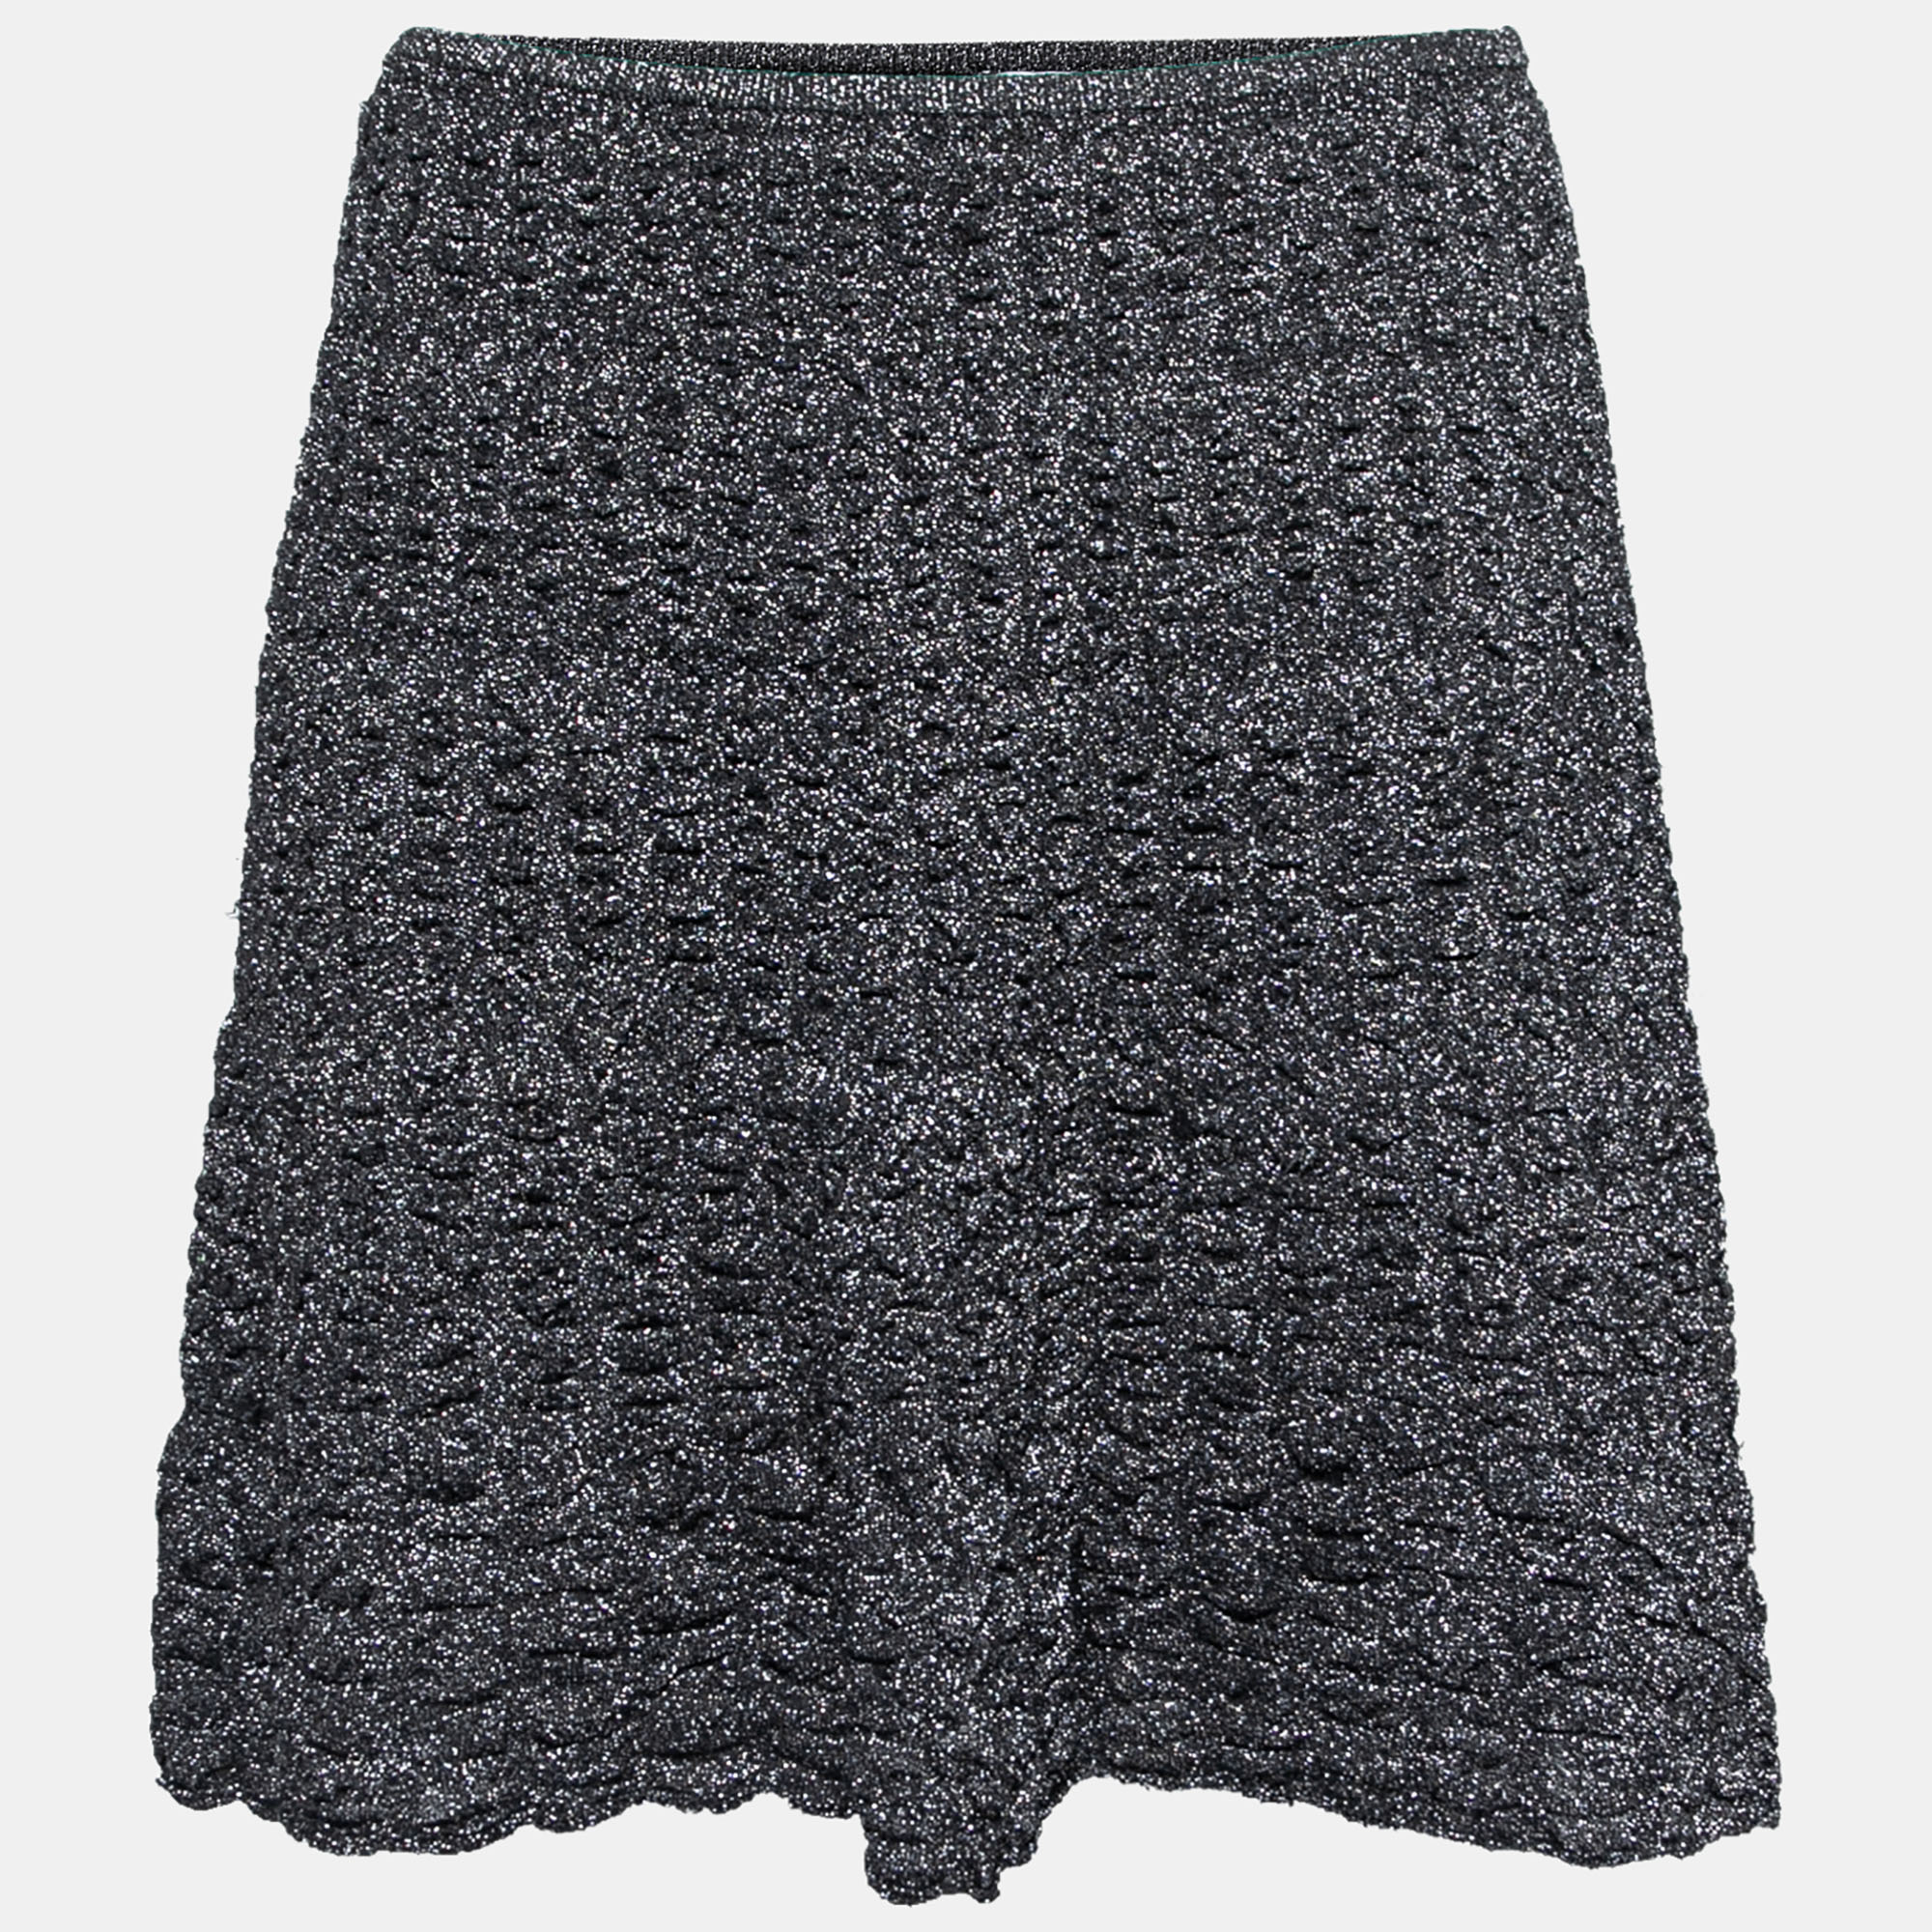 

M Missoni Metallic Grey Lurex Knit Textured Flared Skirt